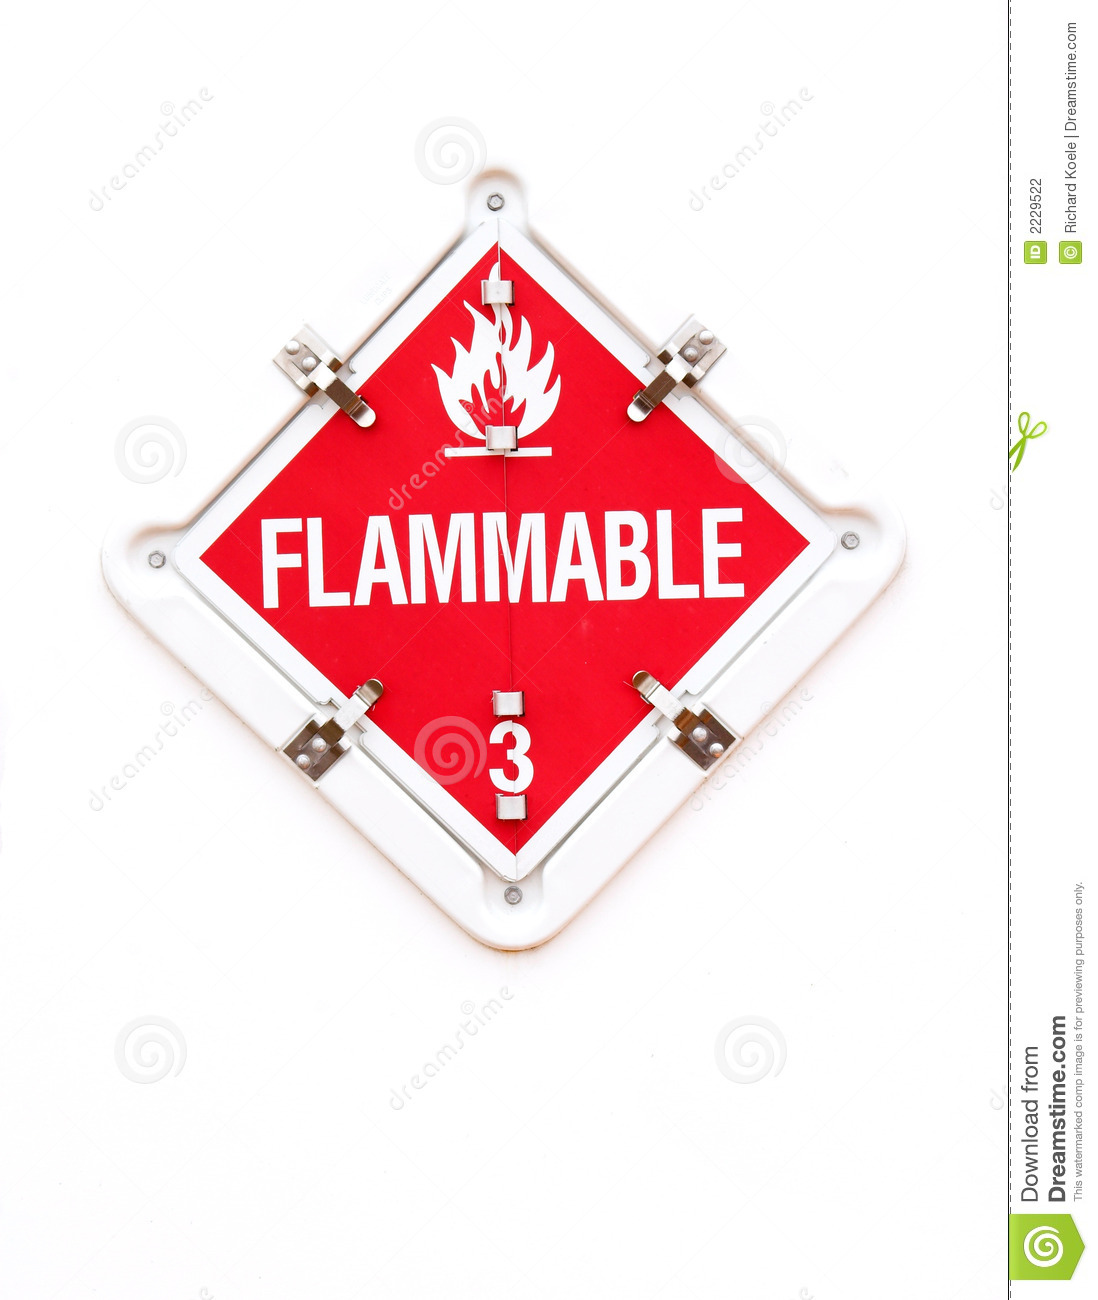 FLAMMABLE AREA Logo photo - 1